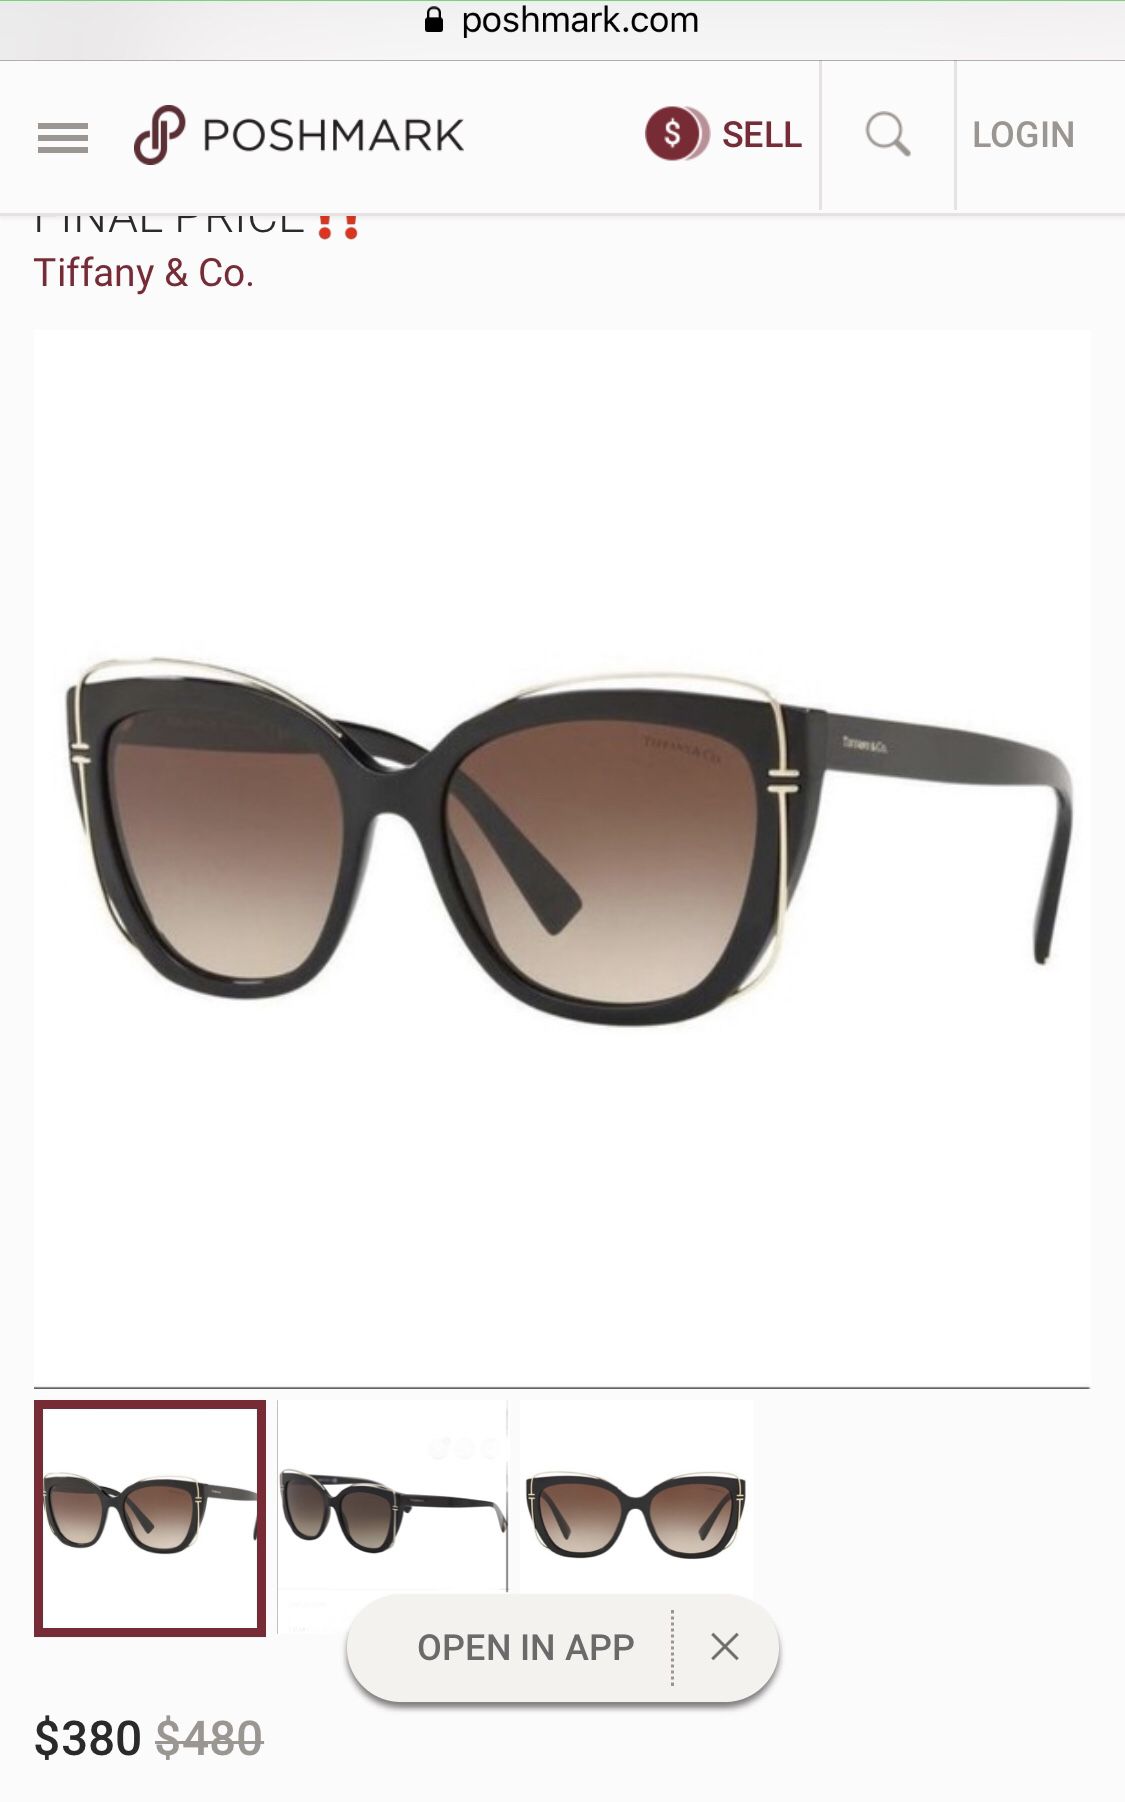 Tiffany & Co sunglasses